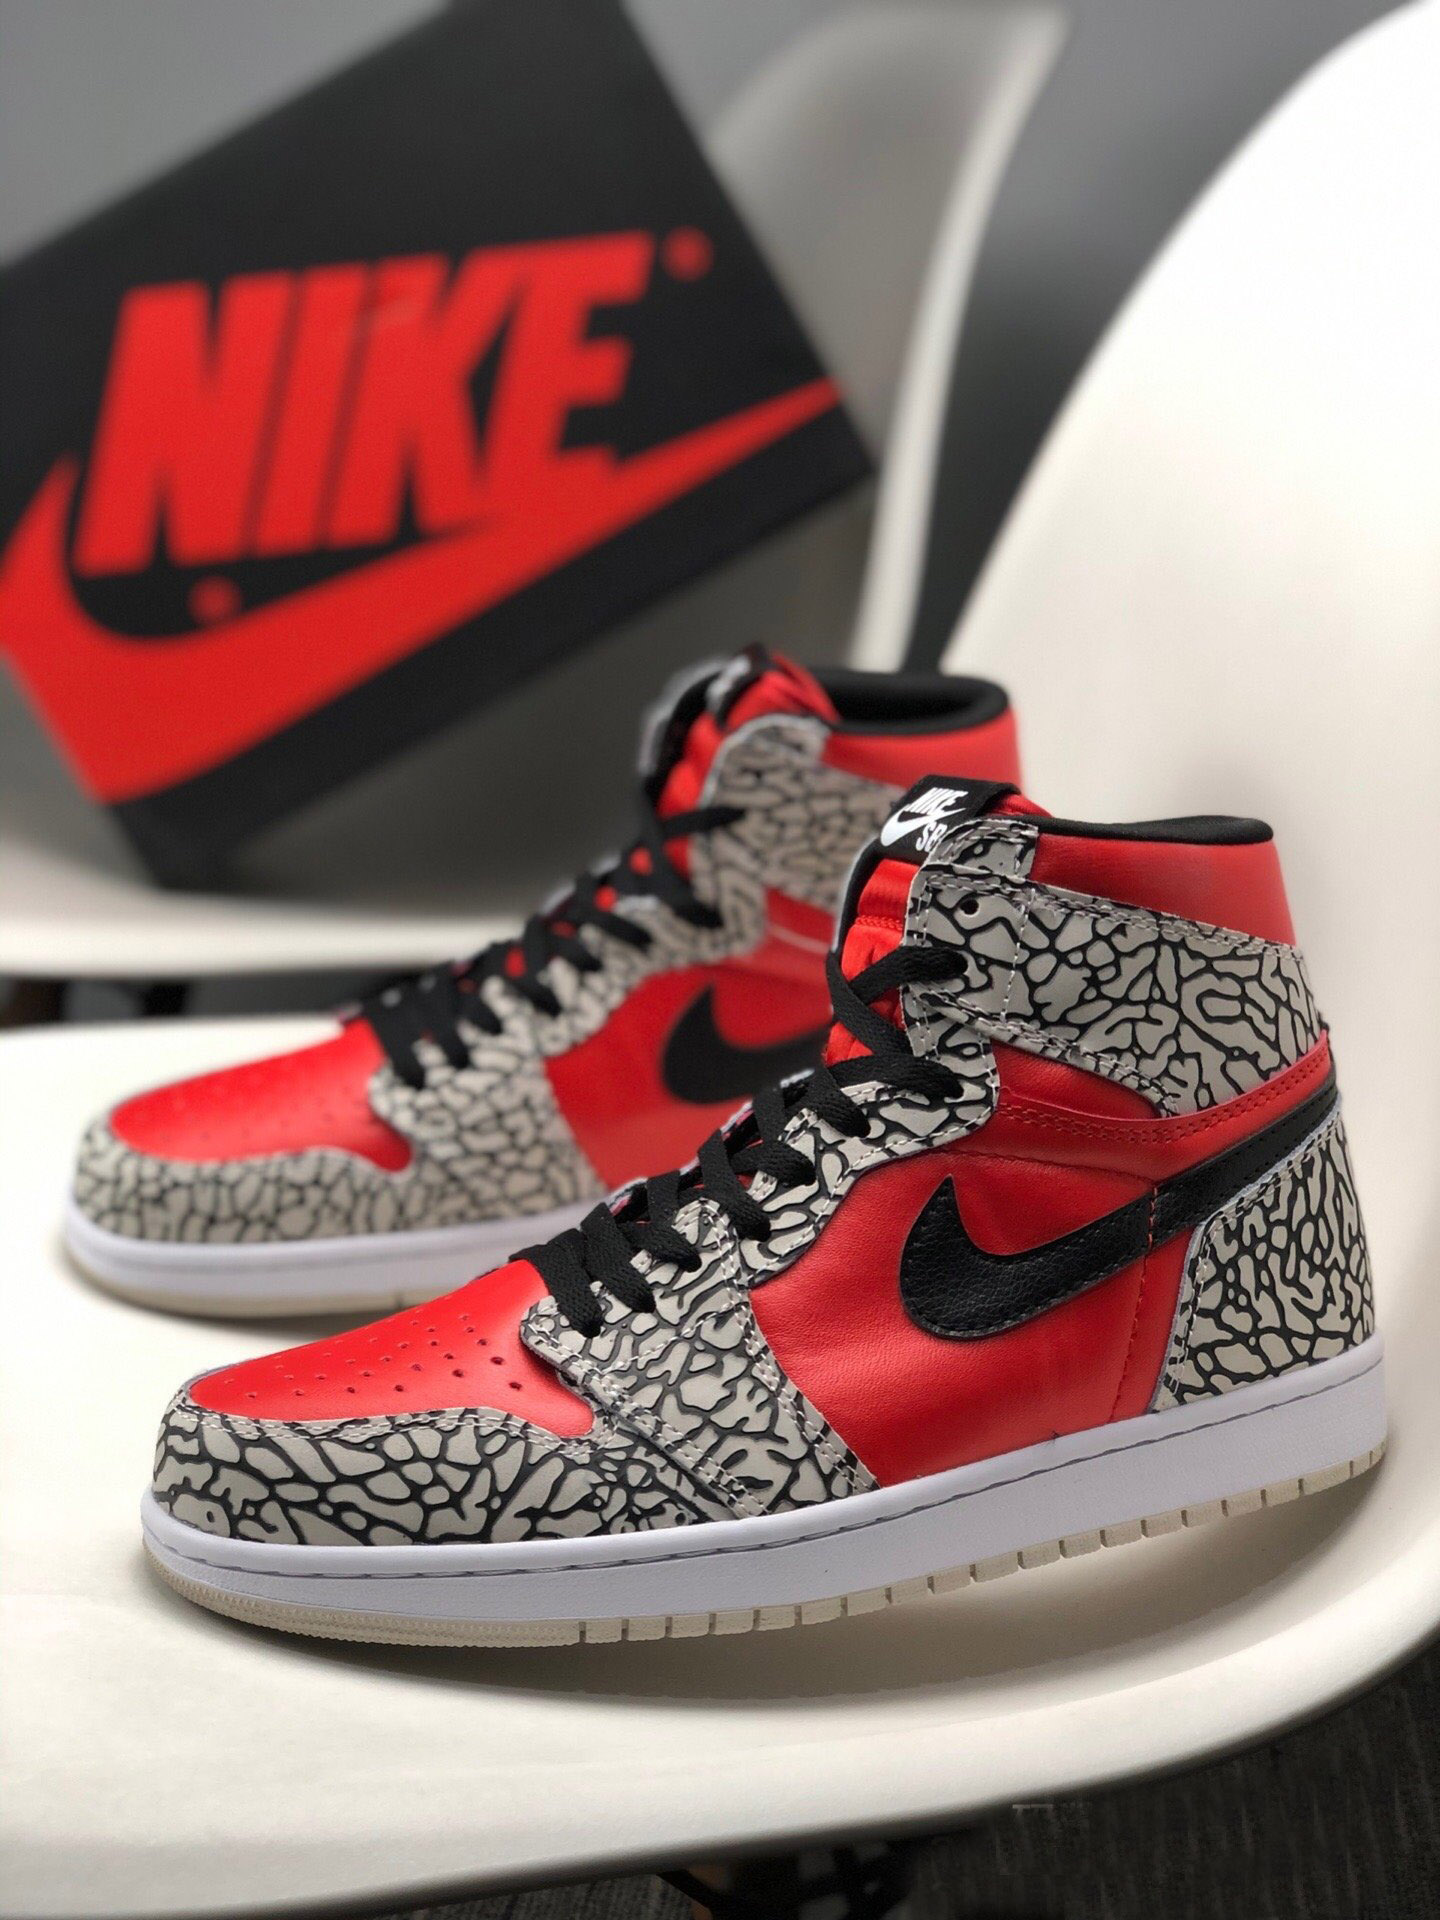 BespokeIND x Air Jordan 1 “Red Cement” Custom For Sale Sneaker Hello